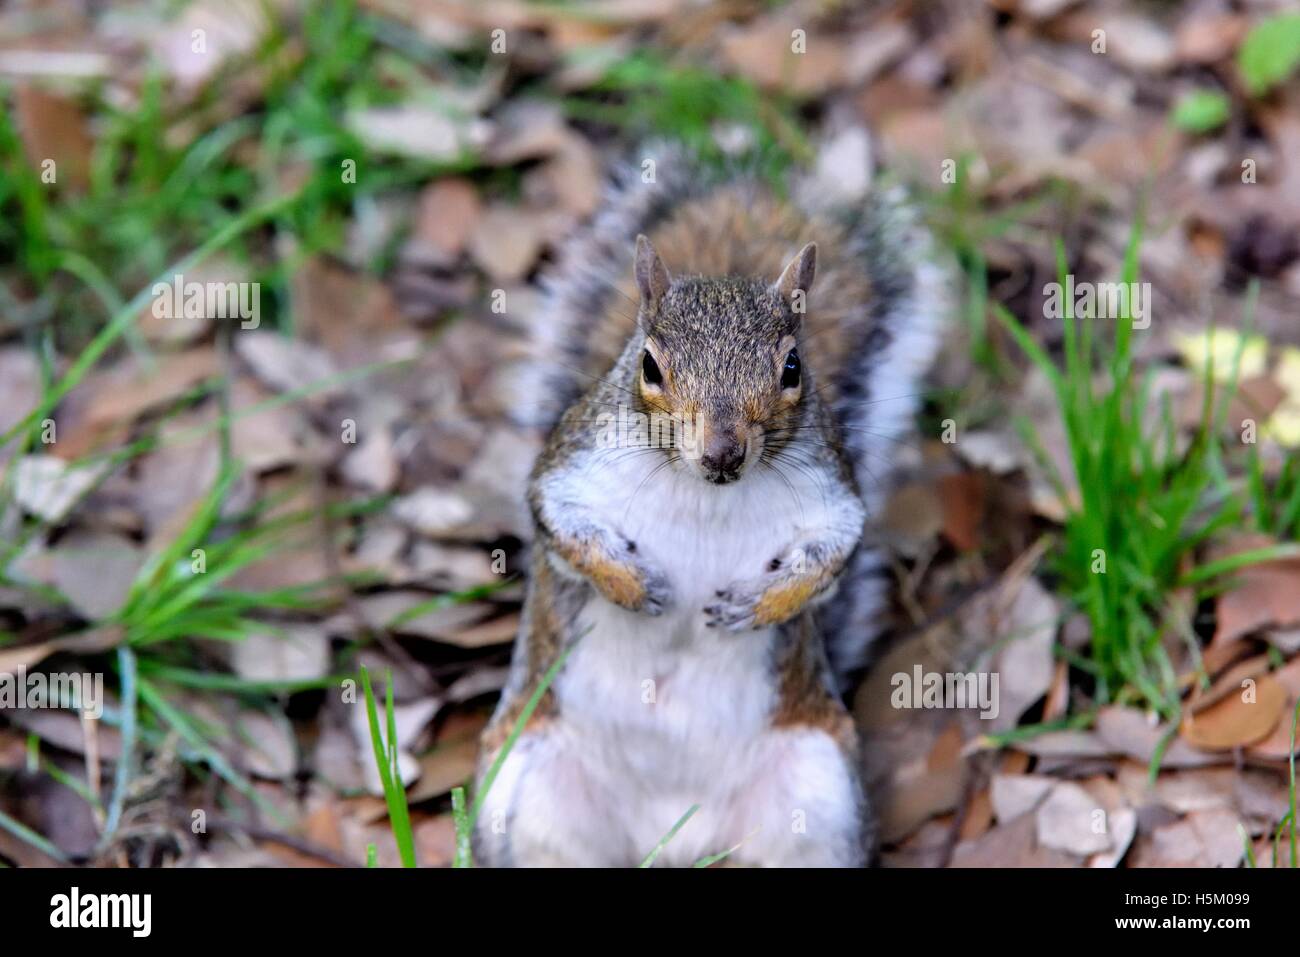 A common grey squirrel (Sciurus carolinensis) standing upright facing the camera Stock Photo